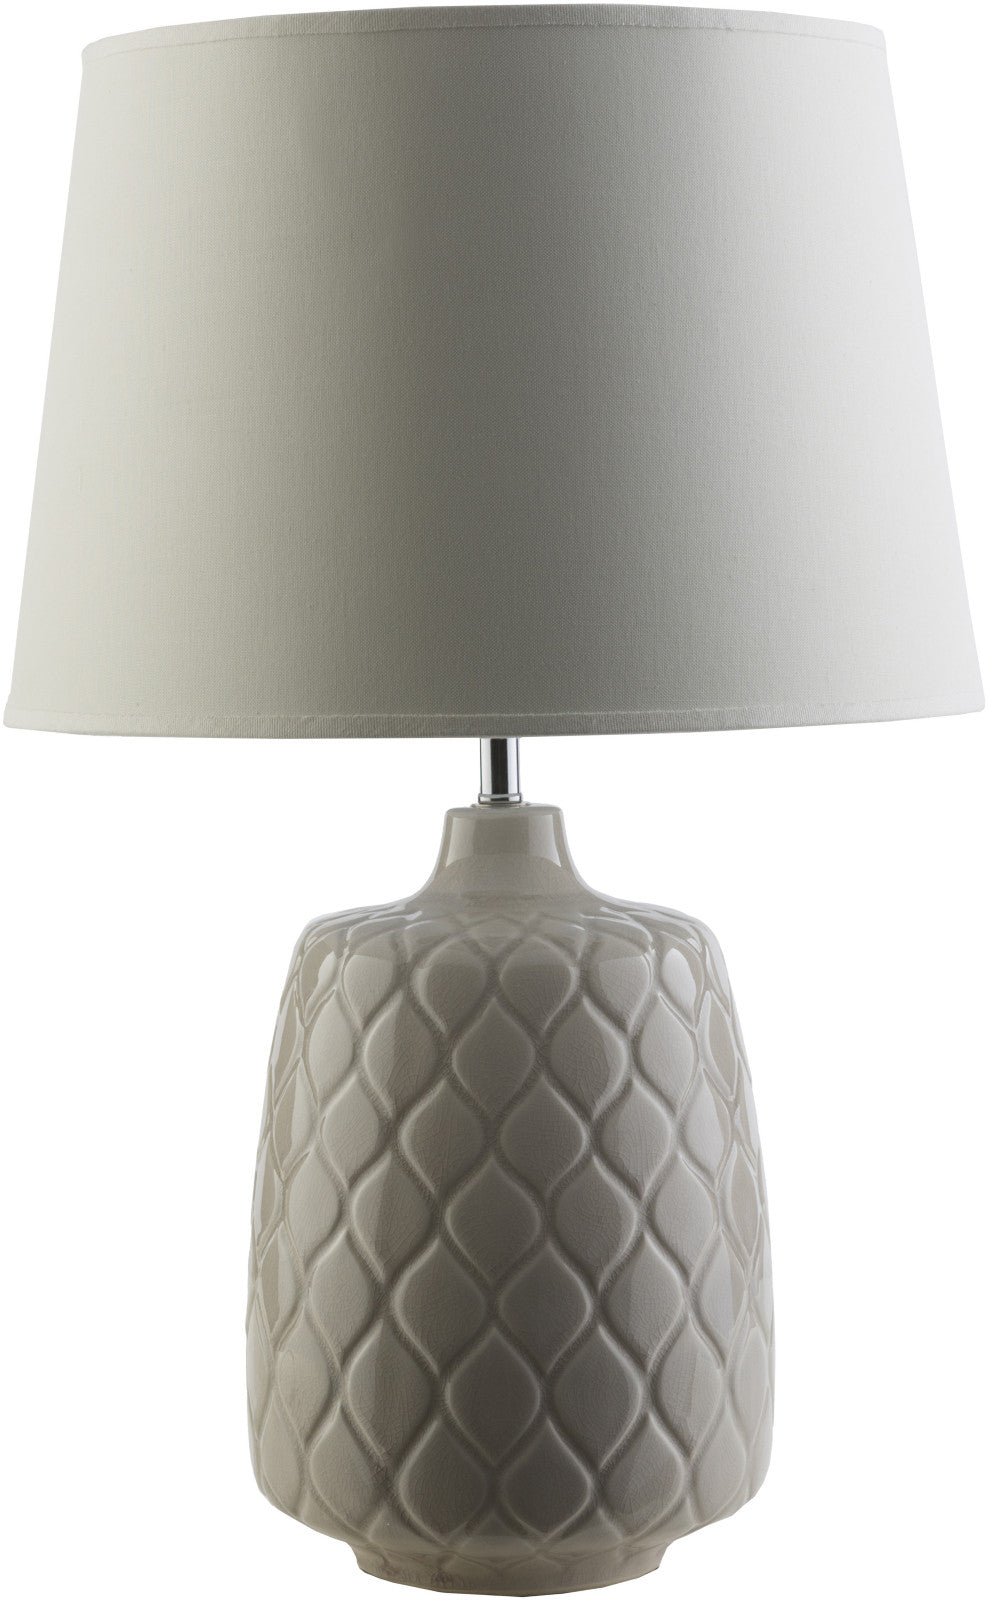 Surya Claiborne CLB-440 Ivory Lamp Table Lamp